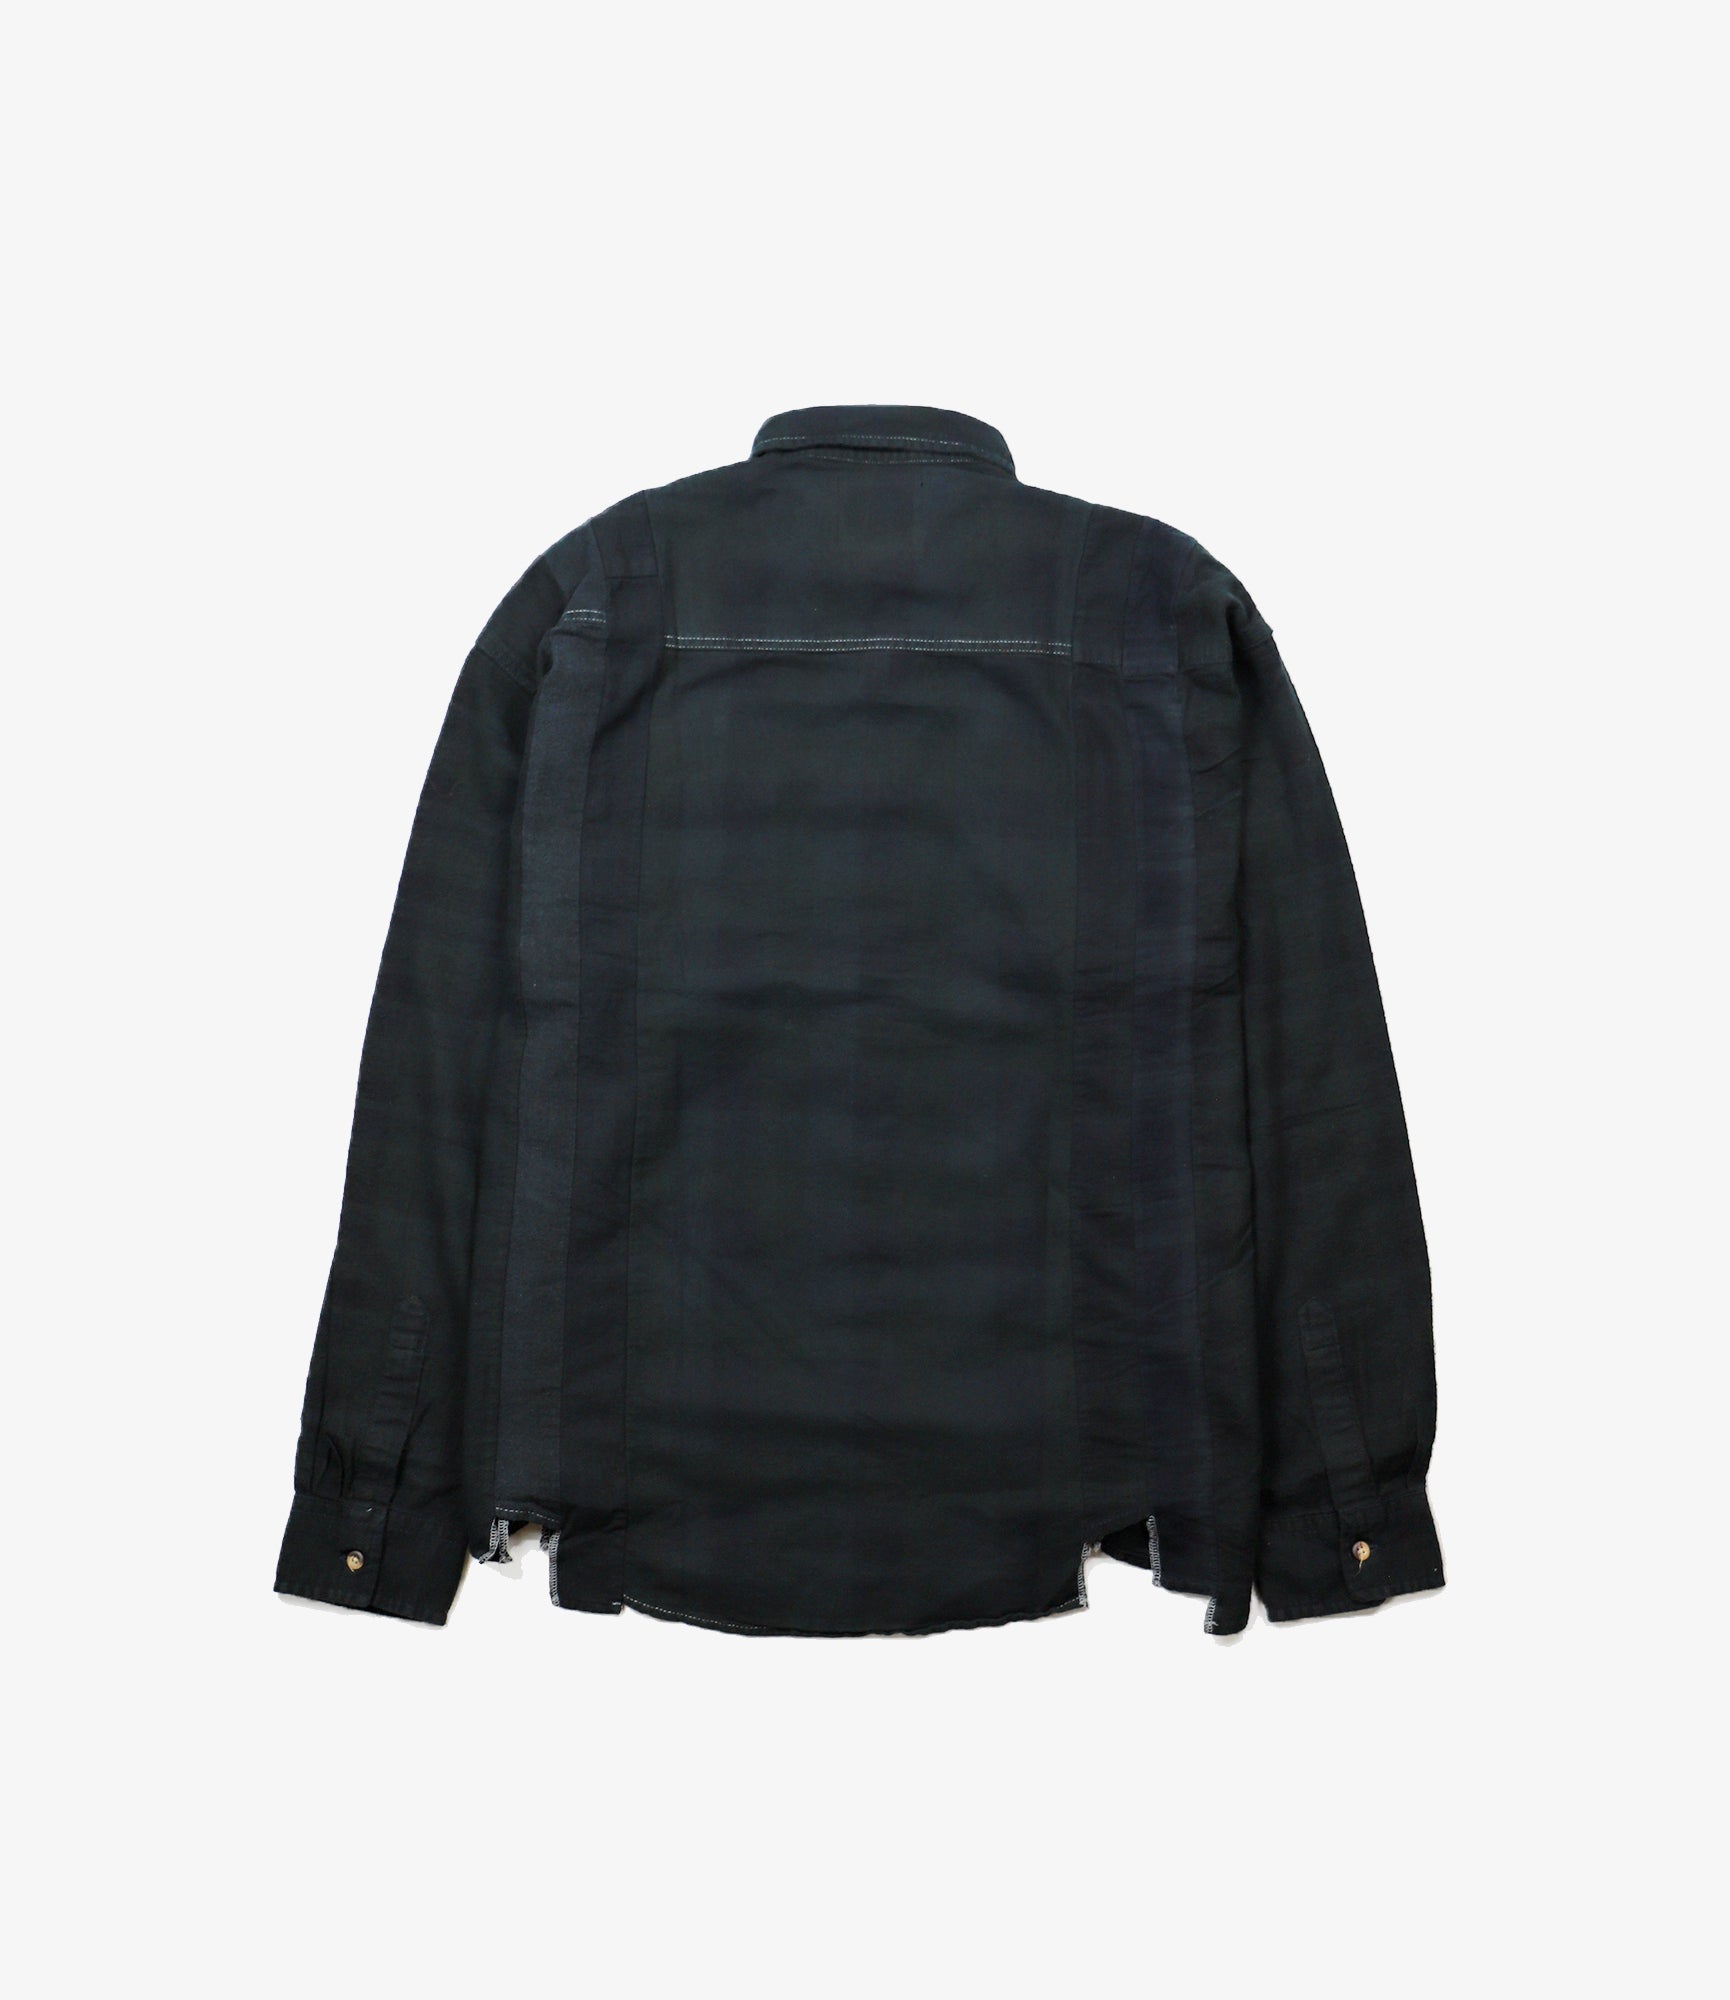 Needles x OVO Flannel Shirt - 7 Cuts / Over Dye - Black